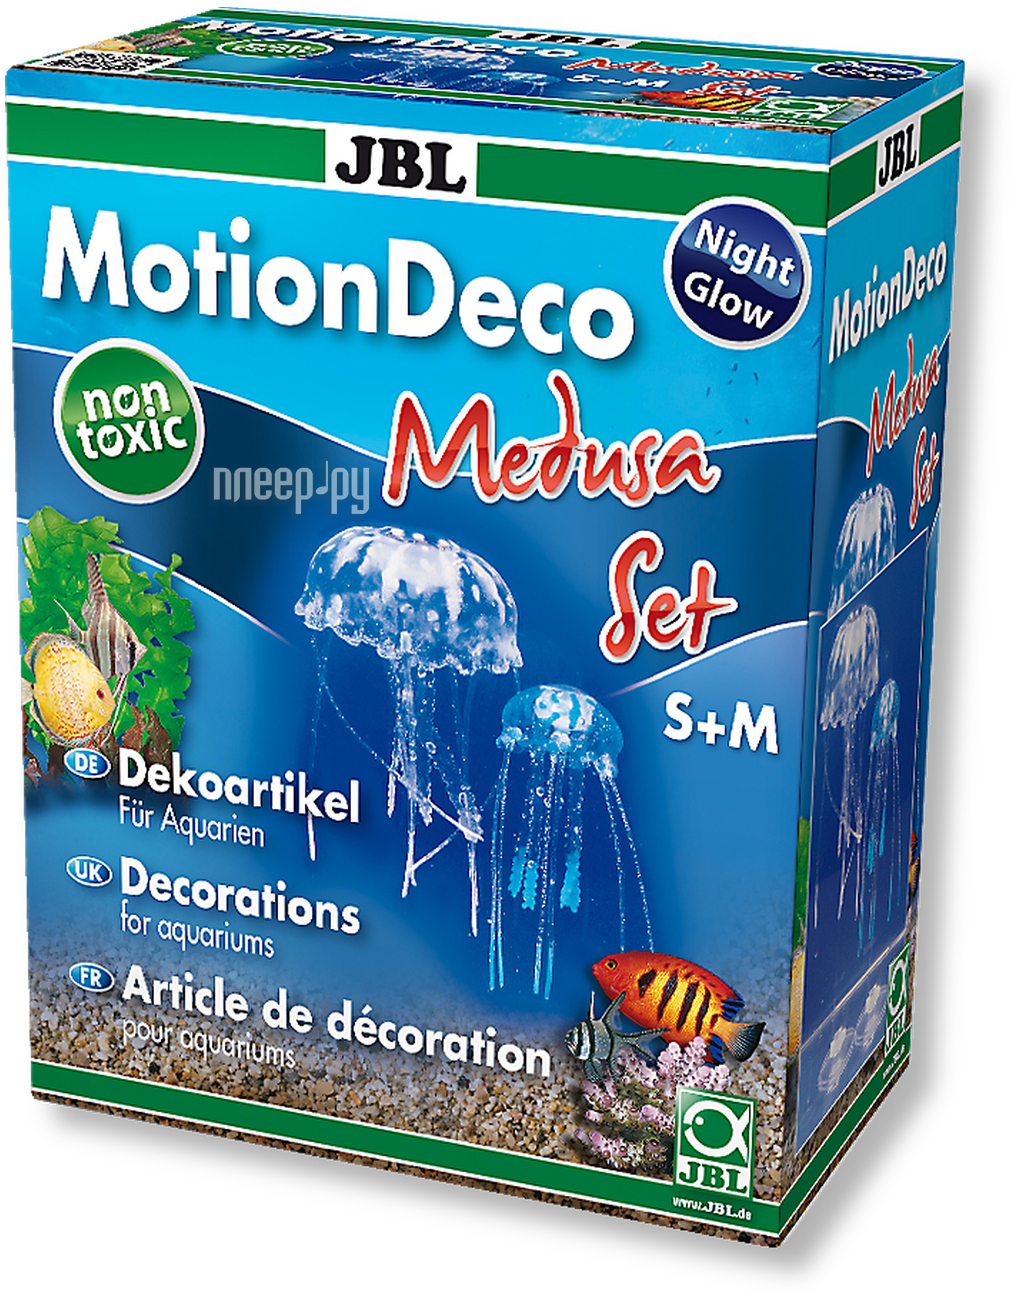 JBL MotionDeco Medusa Set S+M JBL6045200 